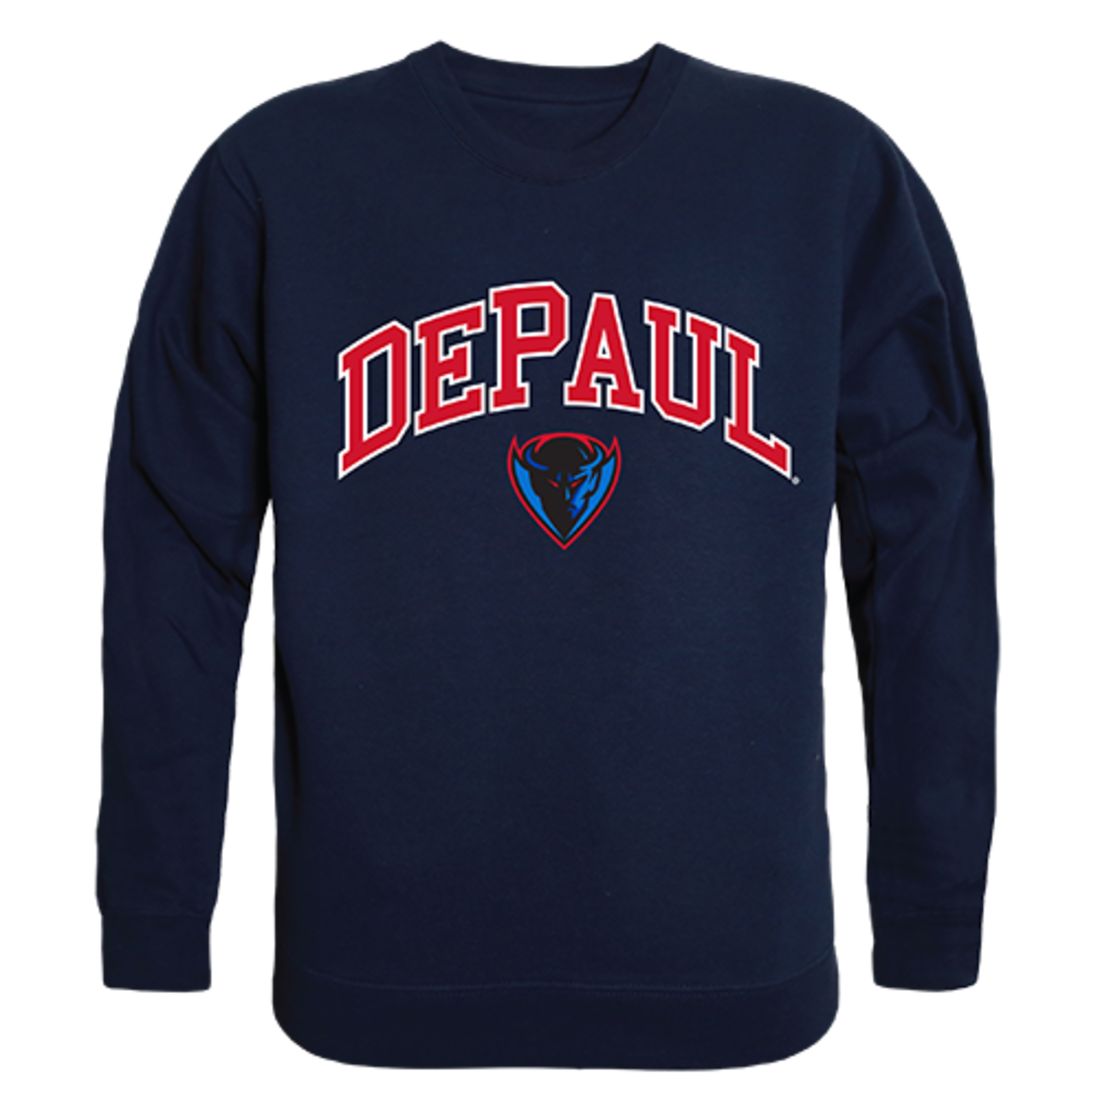 DePaul University Campus Crewneck Pullover Sweatshirt Sweater Navy-Campus-Wardrobe